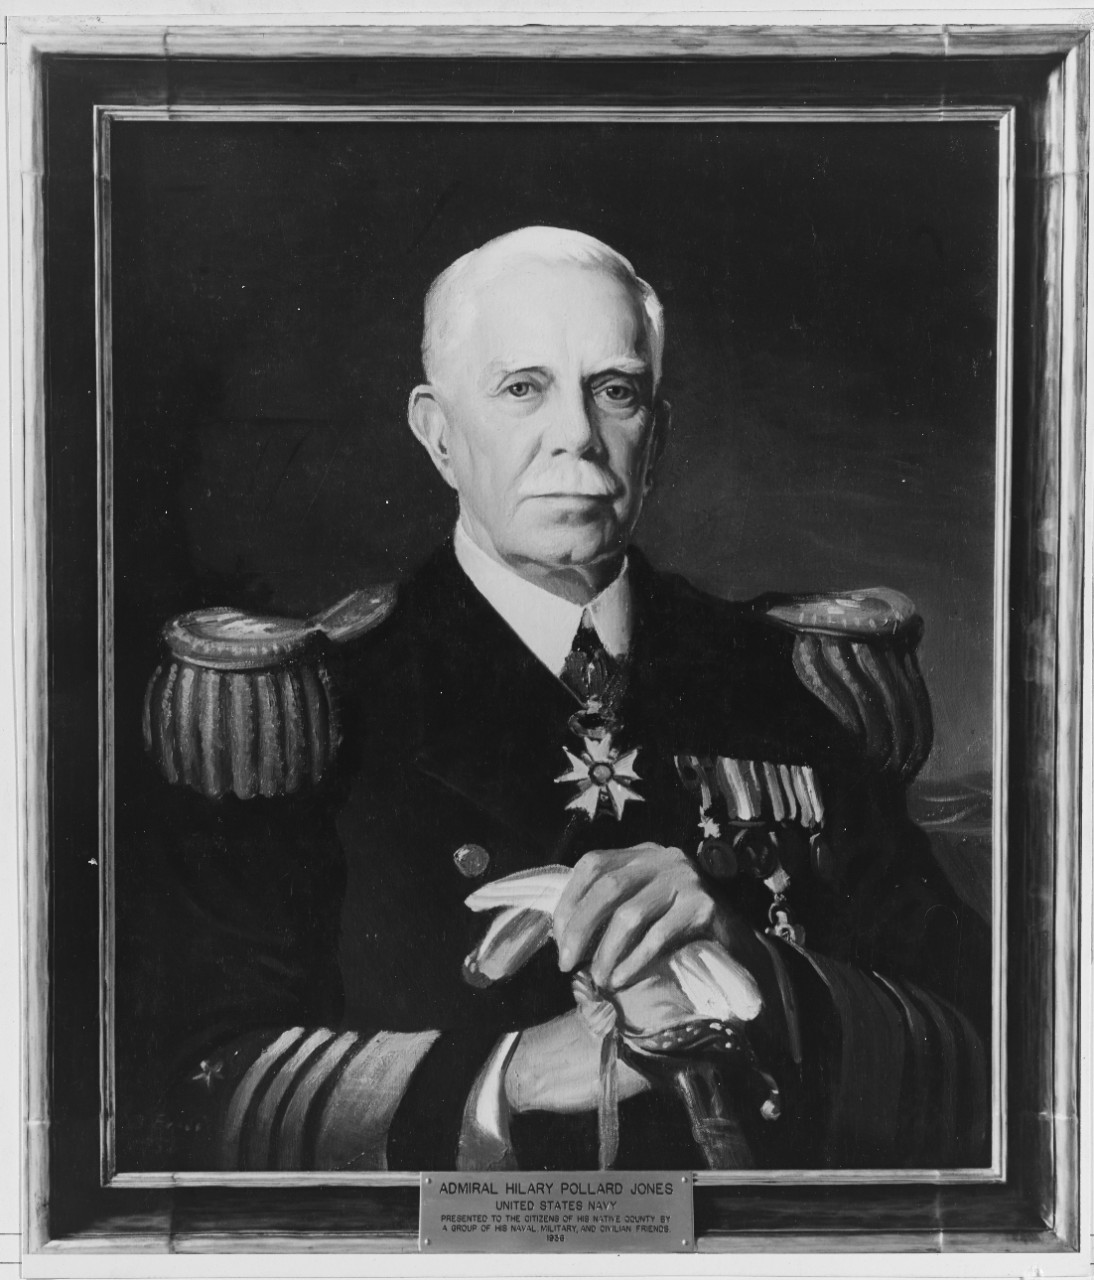 Admiral Hilary Pollard Jones, USN